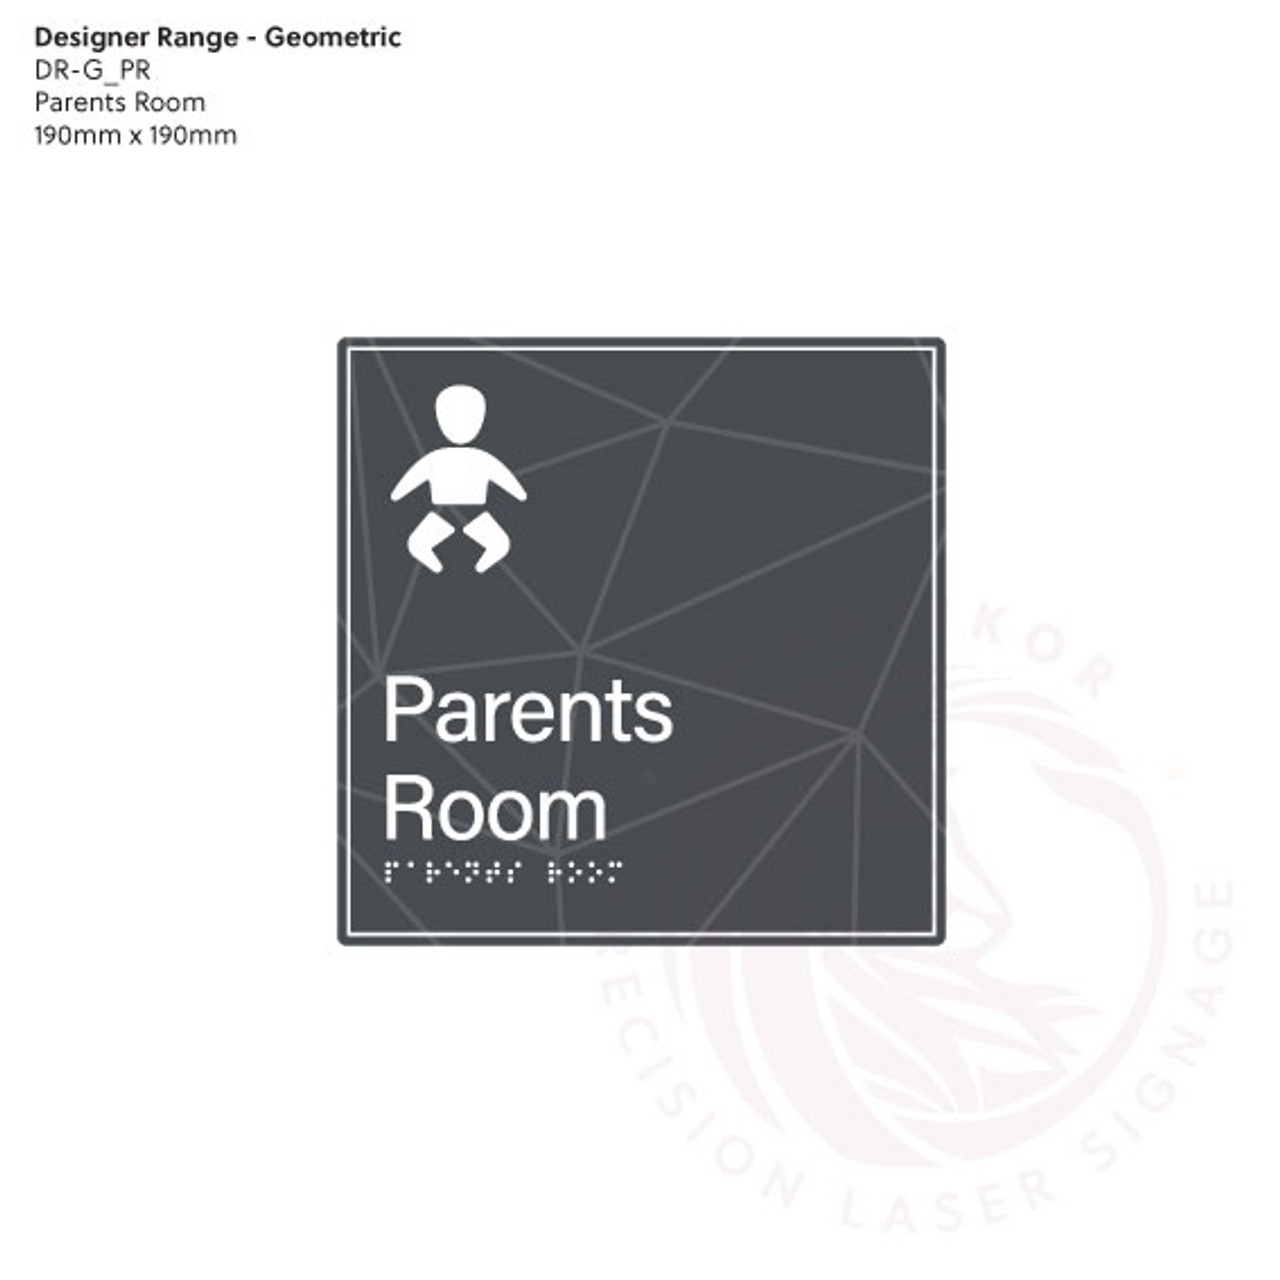 Geometric Designer Range - Parents Room